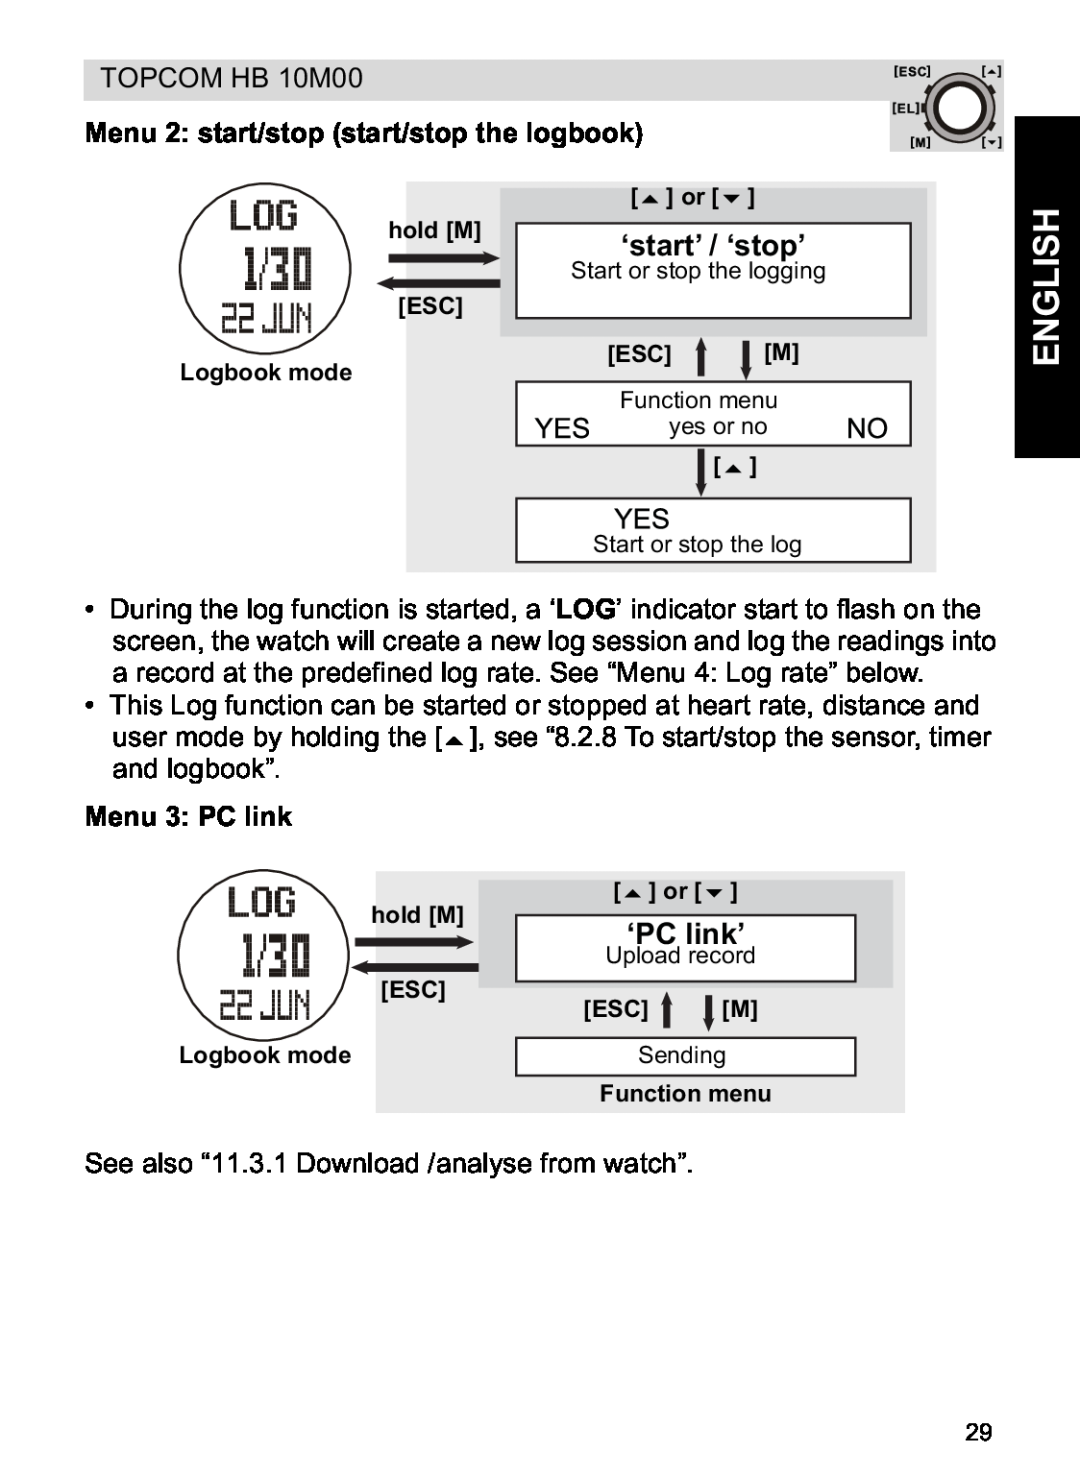 Topcom HB 10M00 manual ‘start’ / ‘stop’, ‘PC link’, Menu 2 start/stop start/stop the logbook, Menu 3 PC link, English 